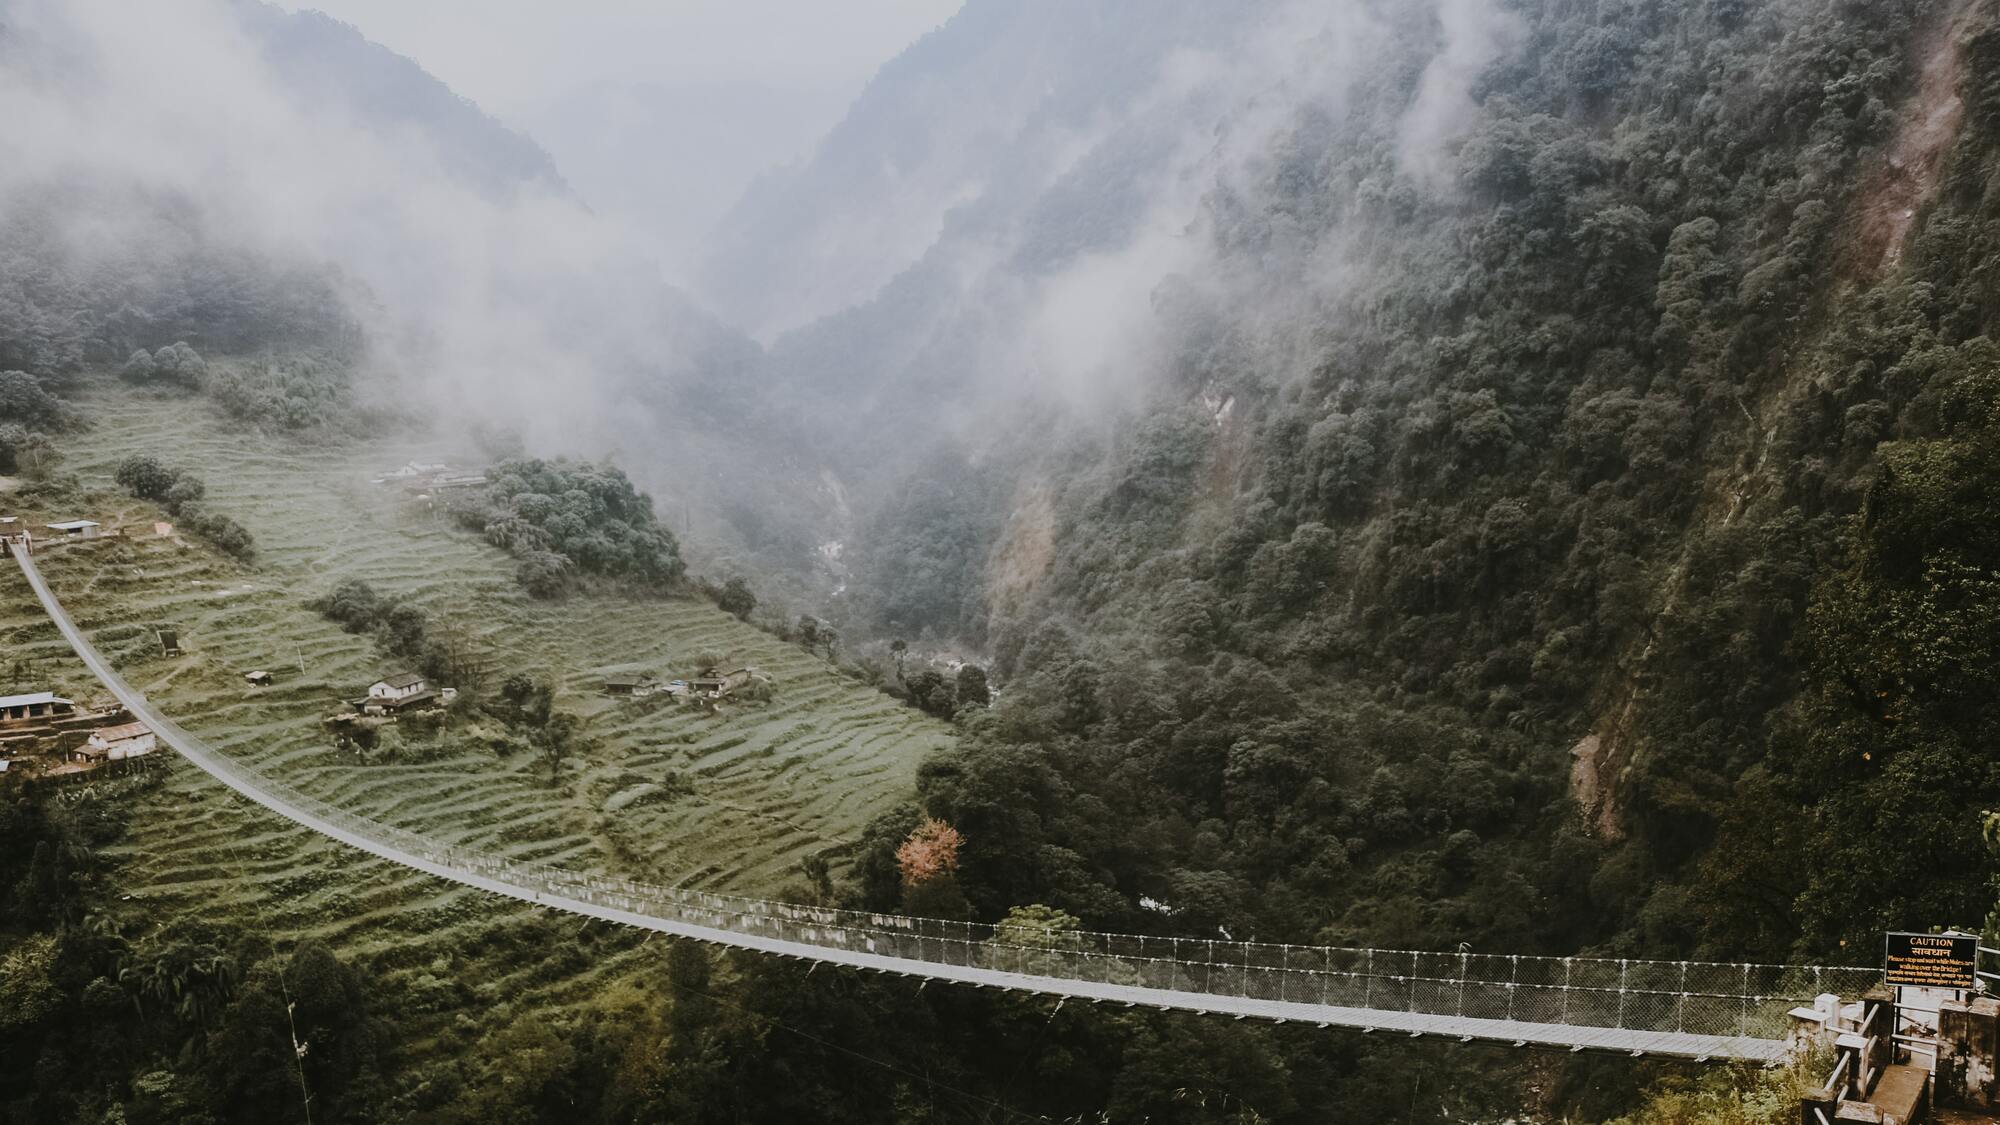 Suspension bridge of Jhinu Danda, Nepal - By Mountain People